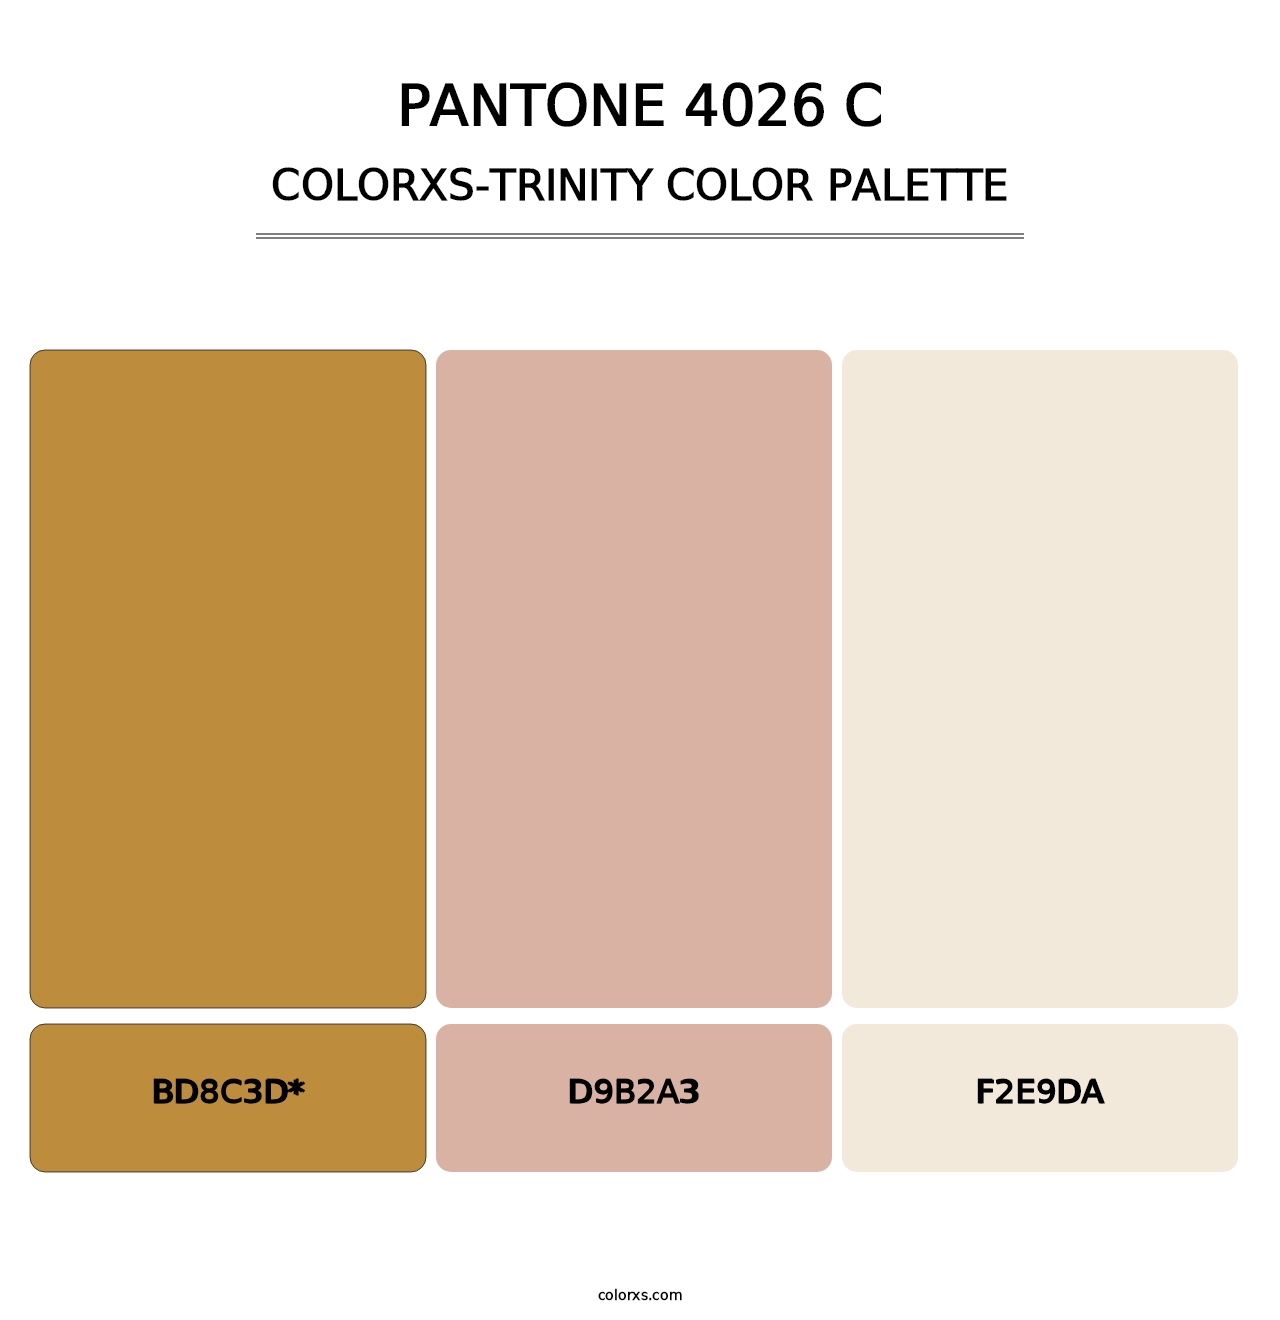 PANTONE 4026 C - Colorxs Trinity Palette